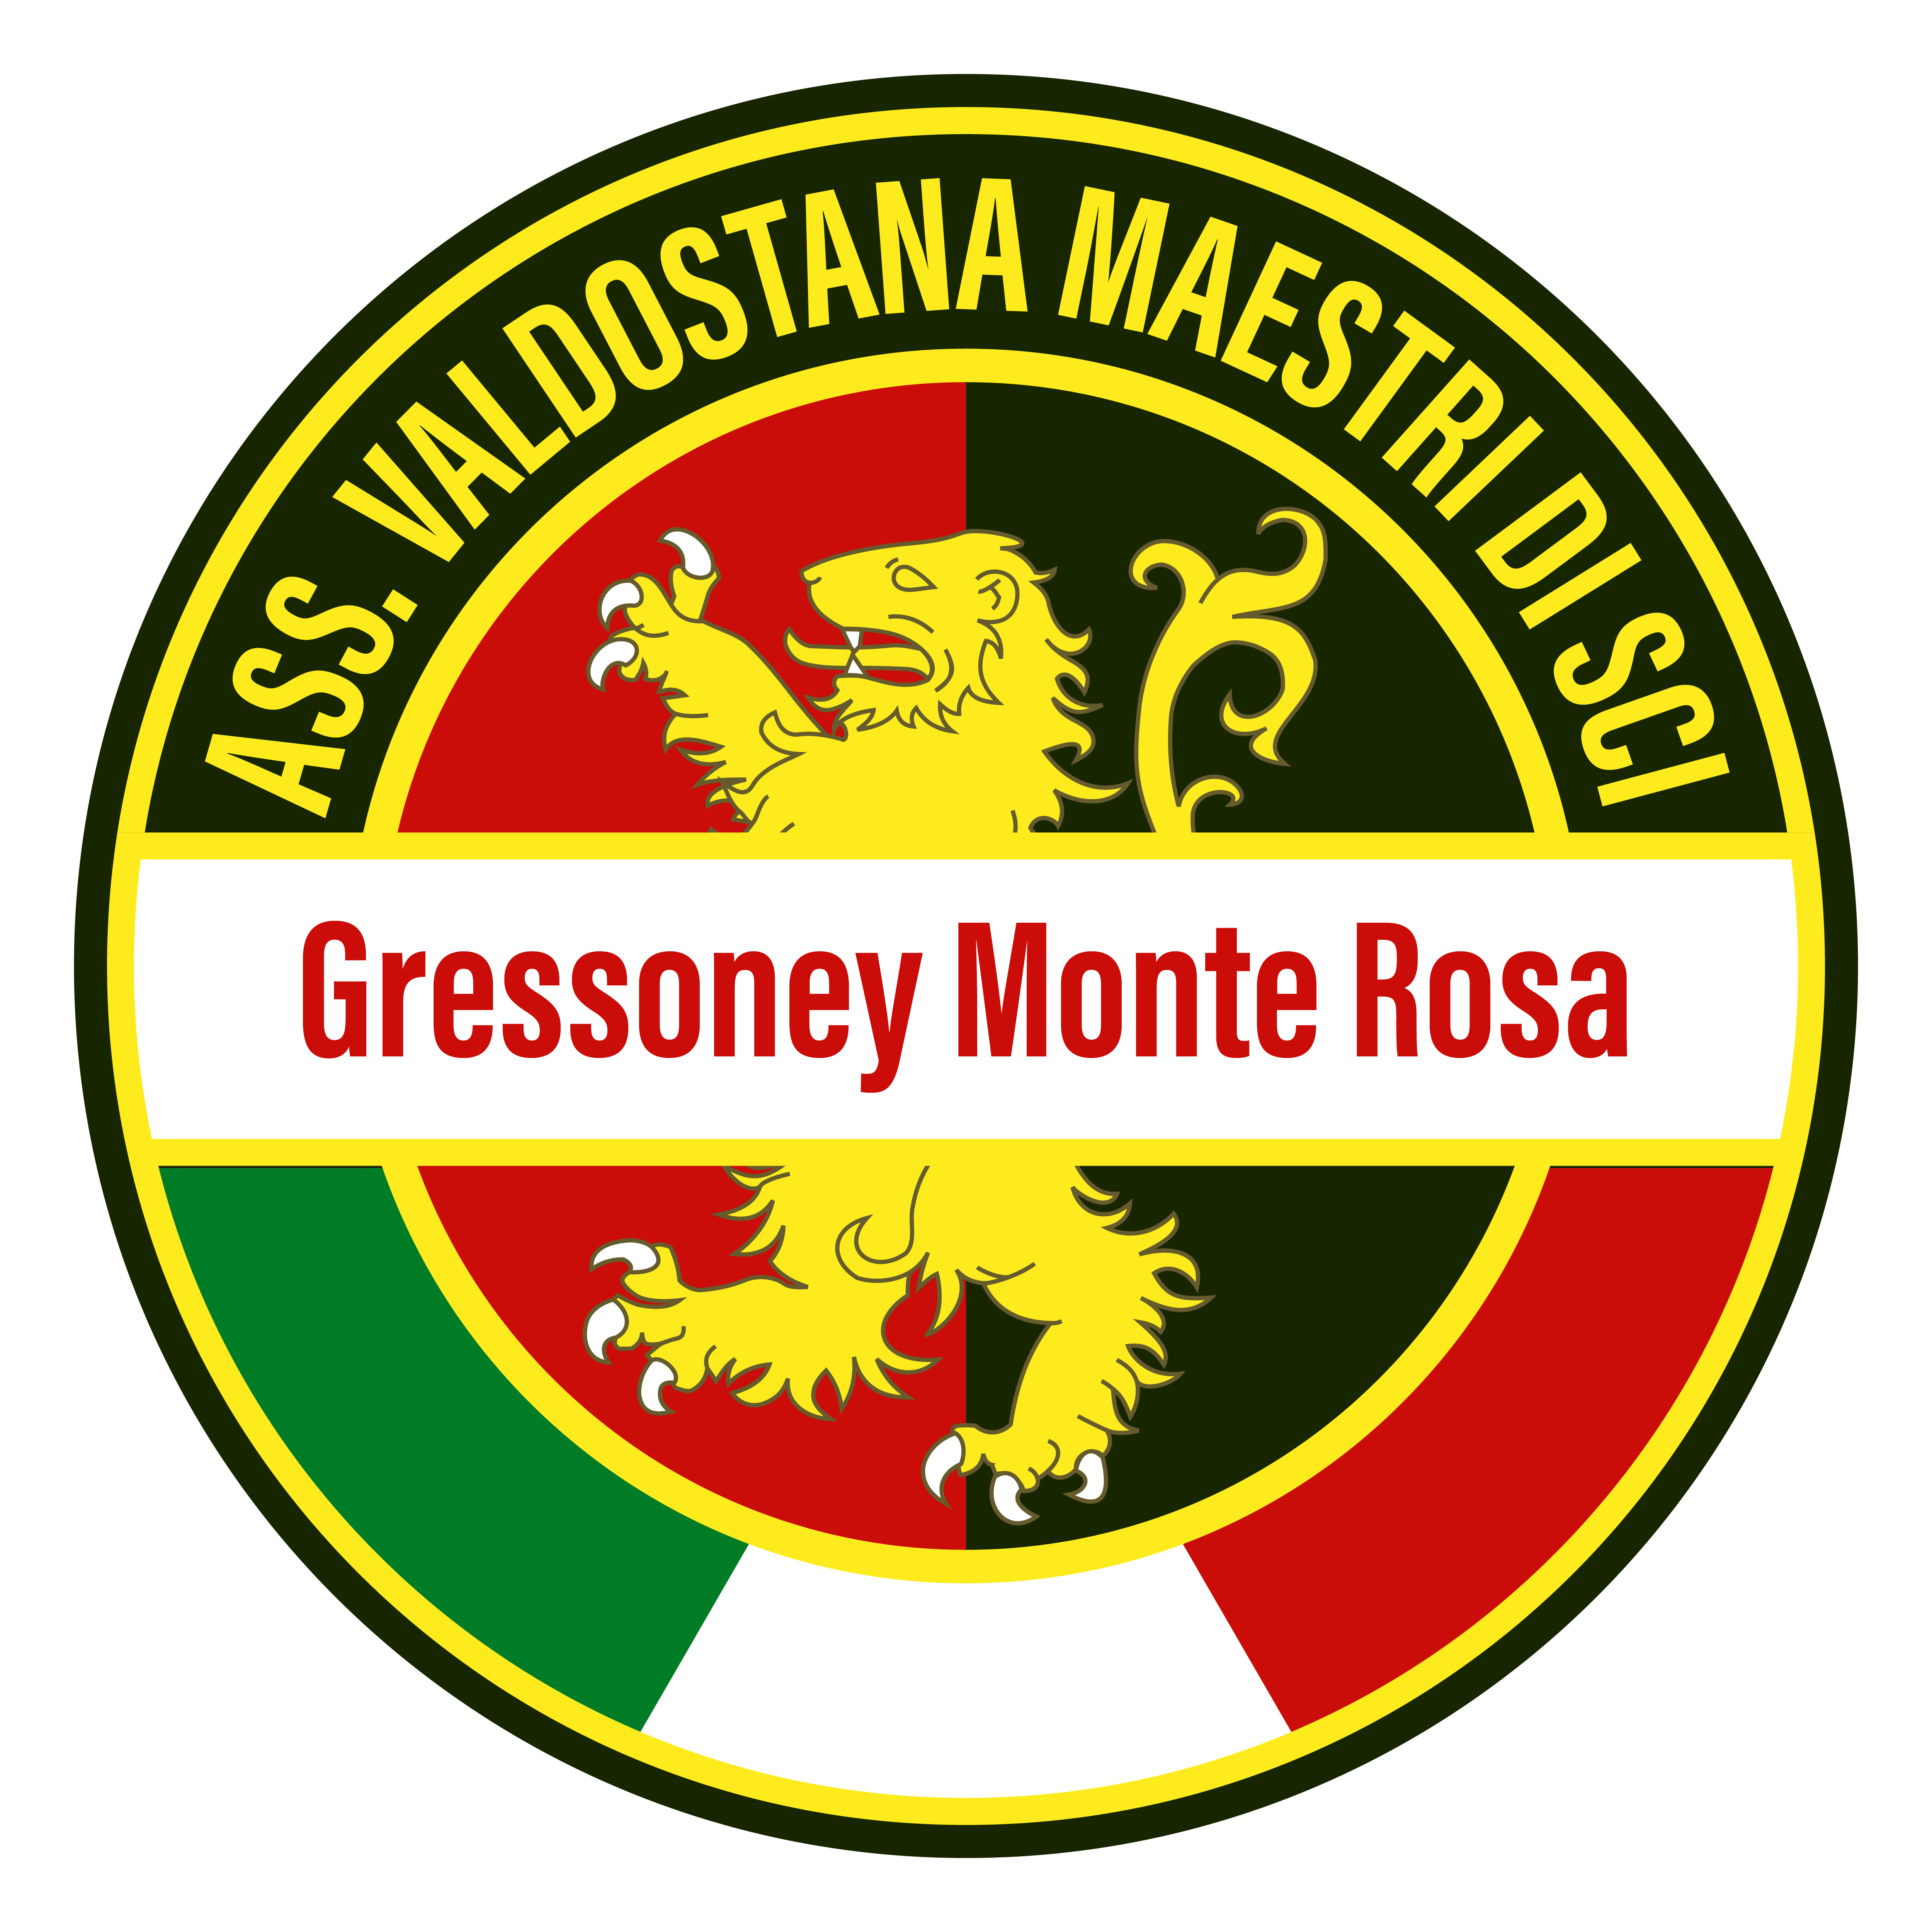 Gressoney Monte Rosa